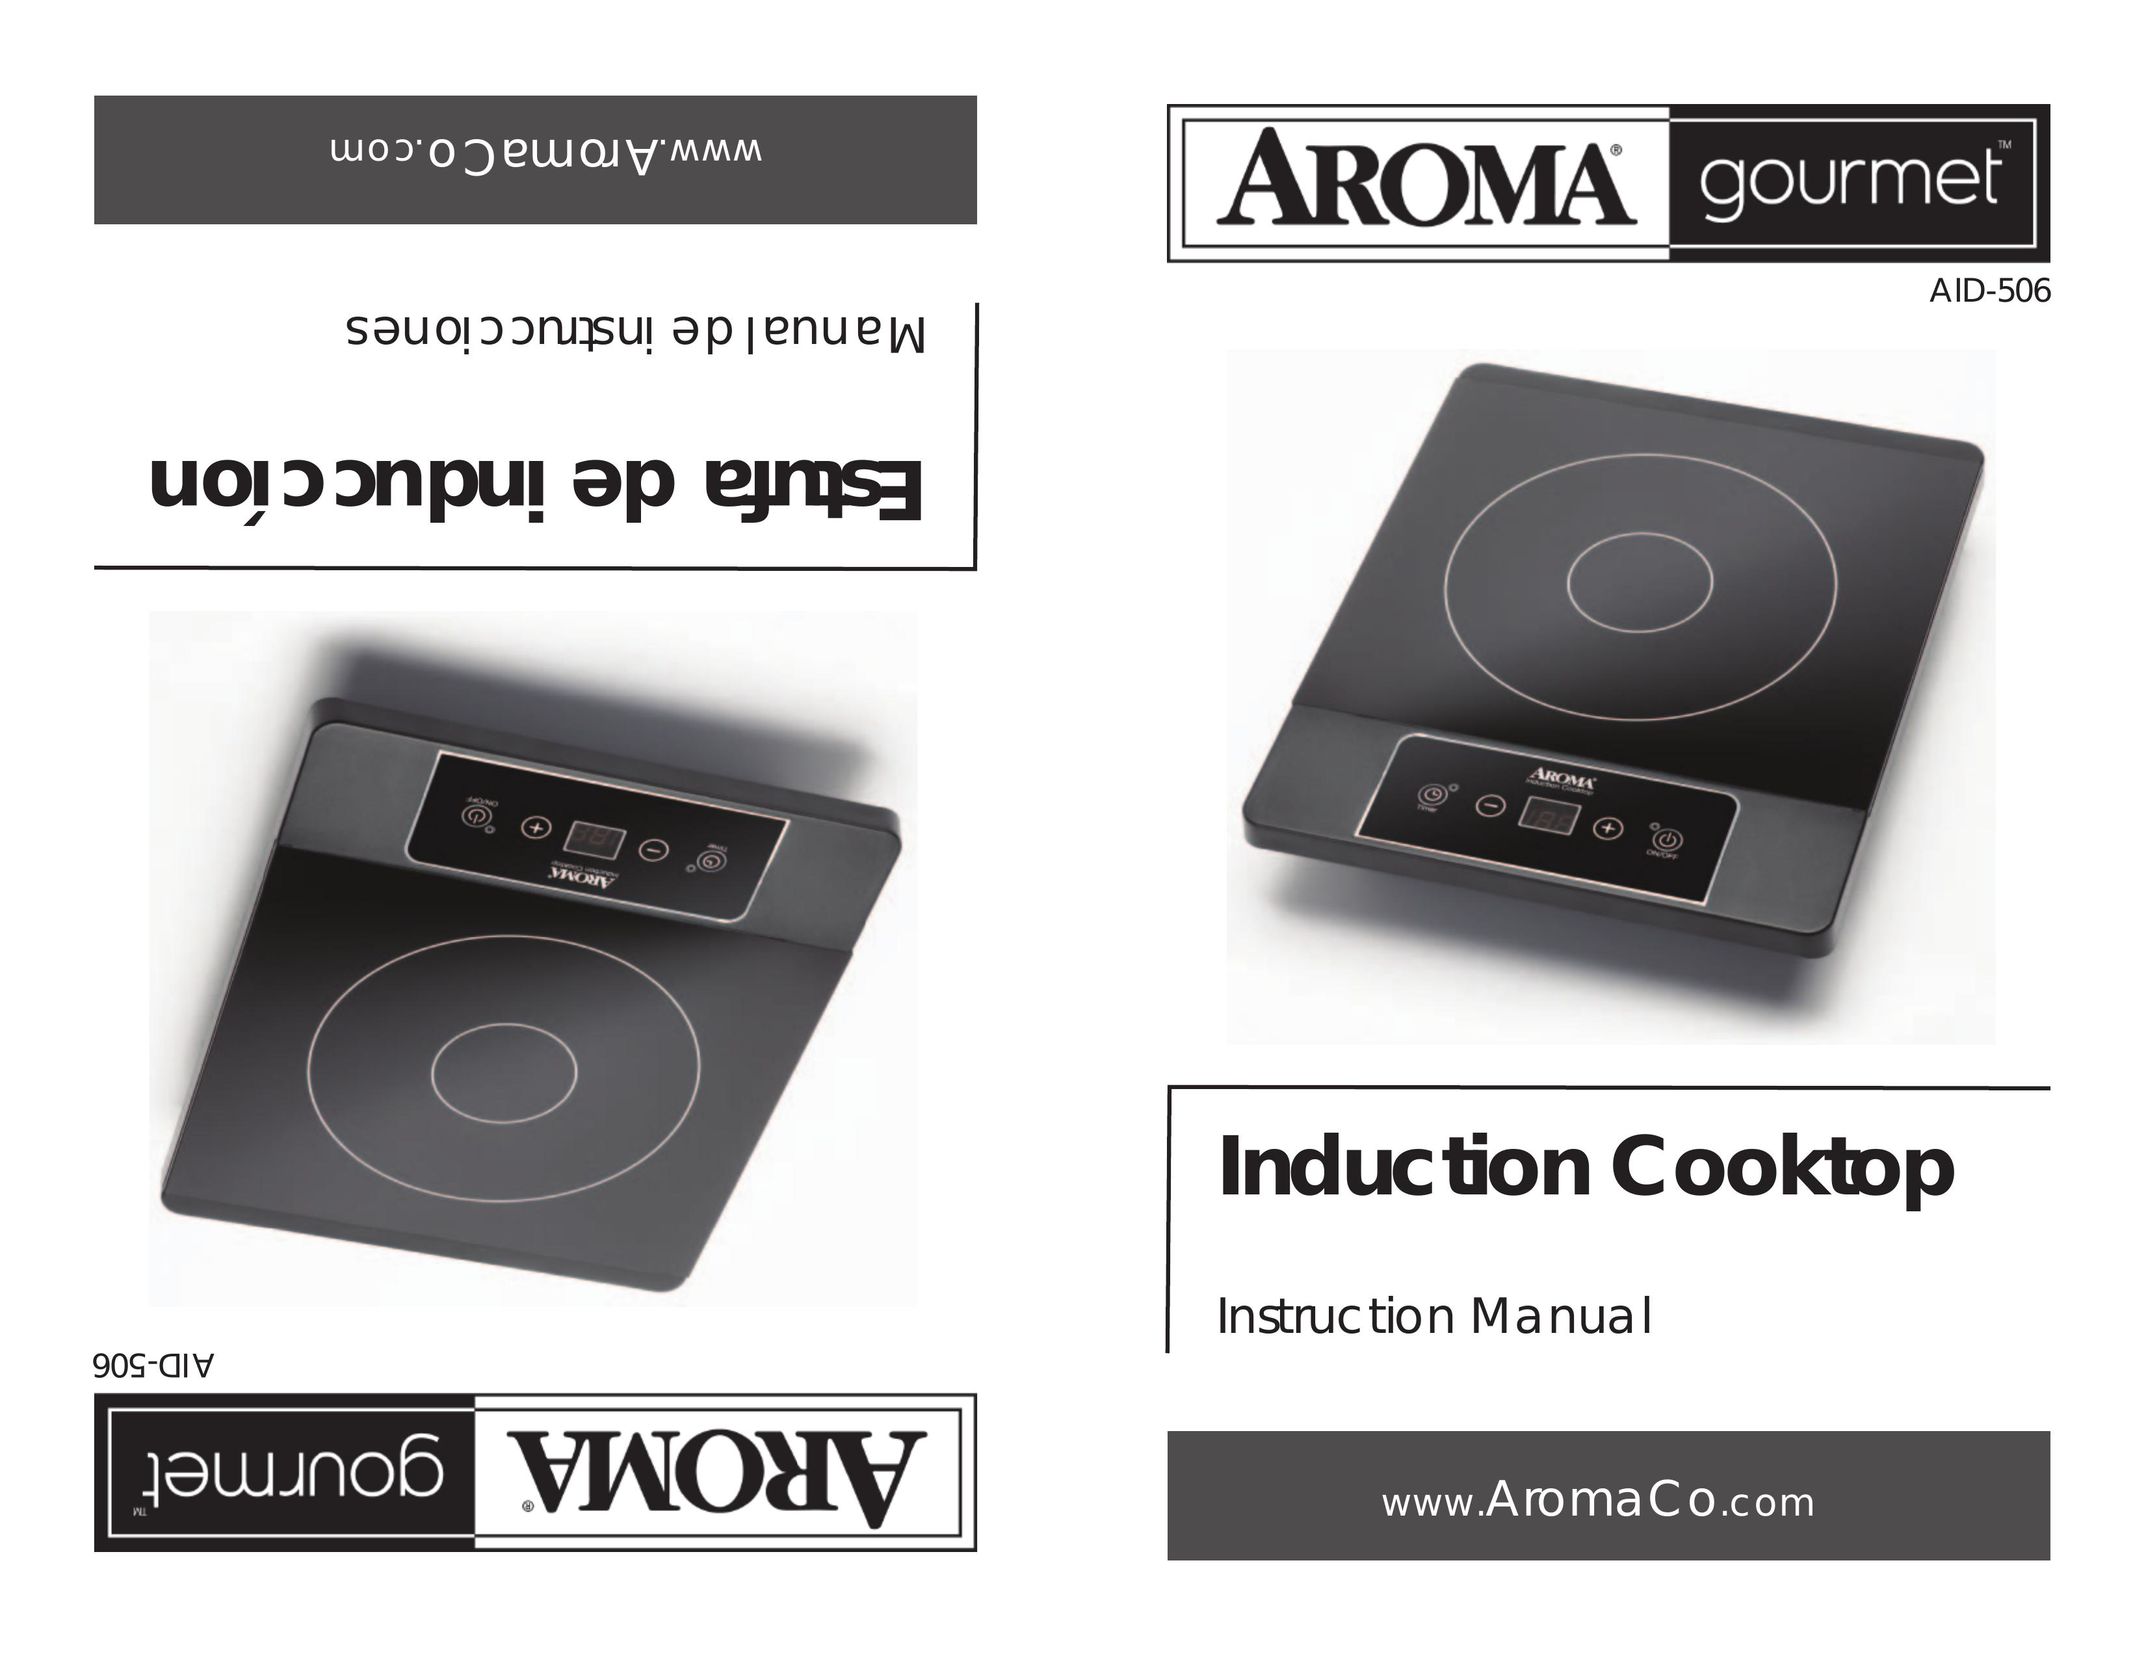 Aroma AID-506 Cooktop User Manual